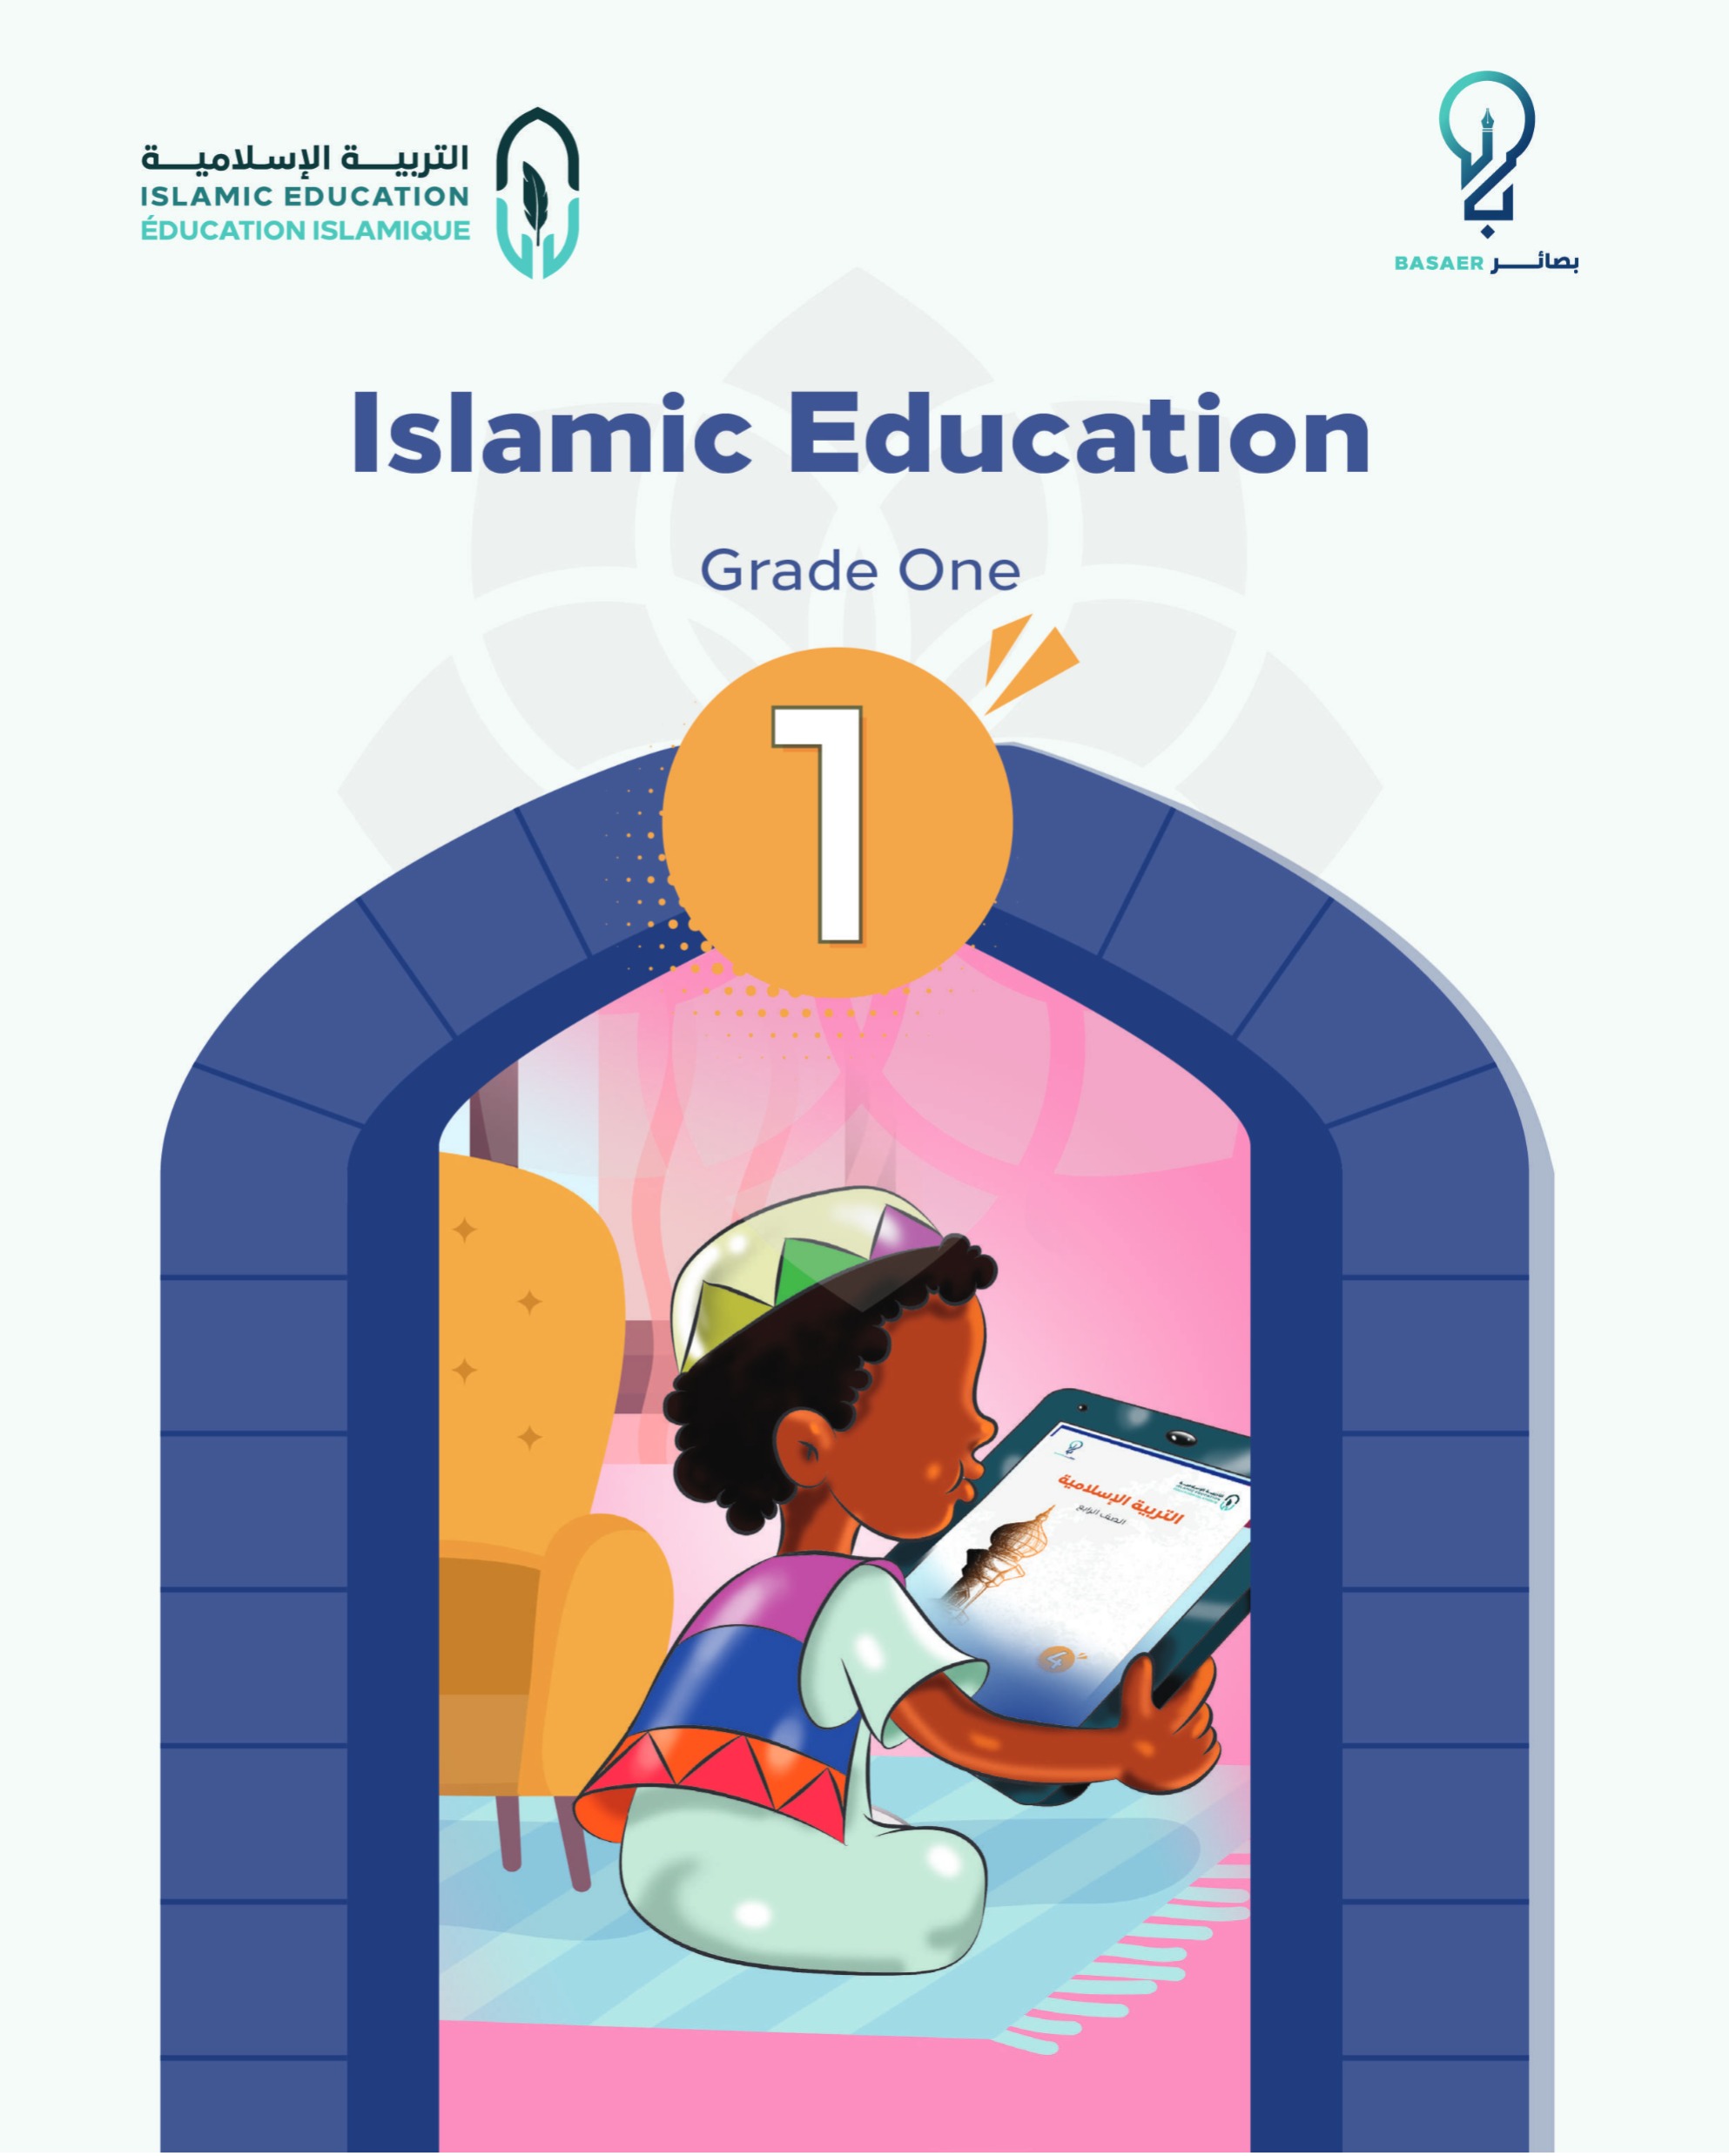 (1) Islamic Education